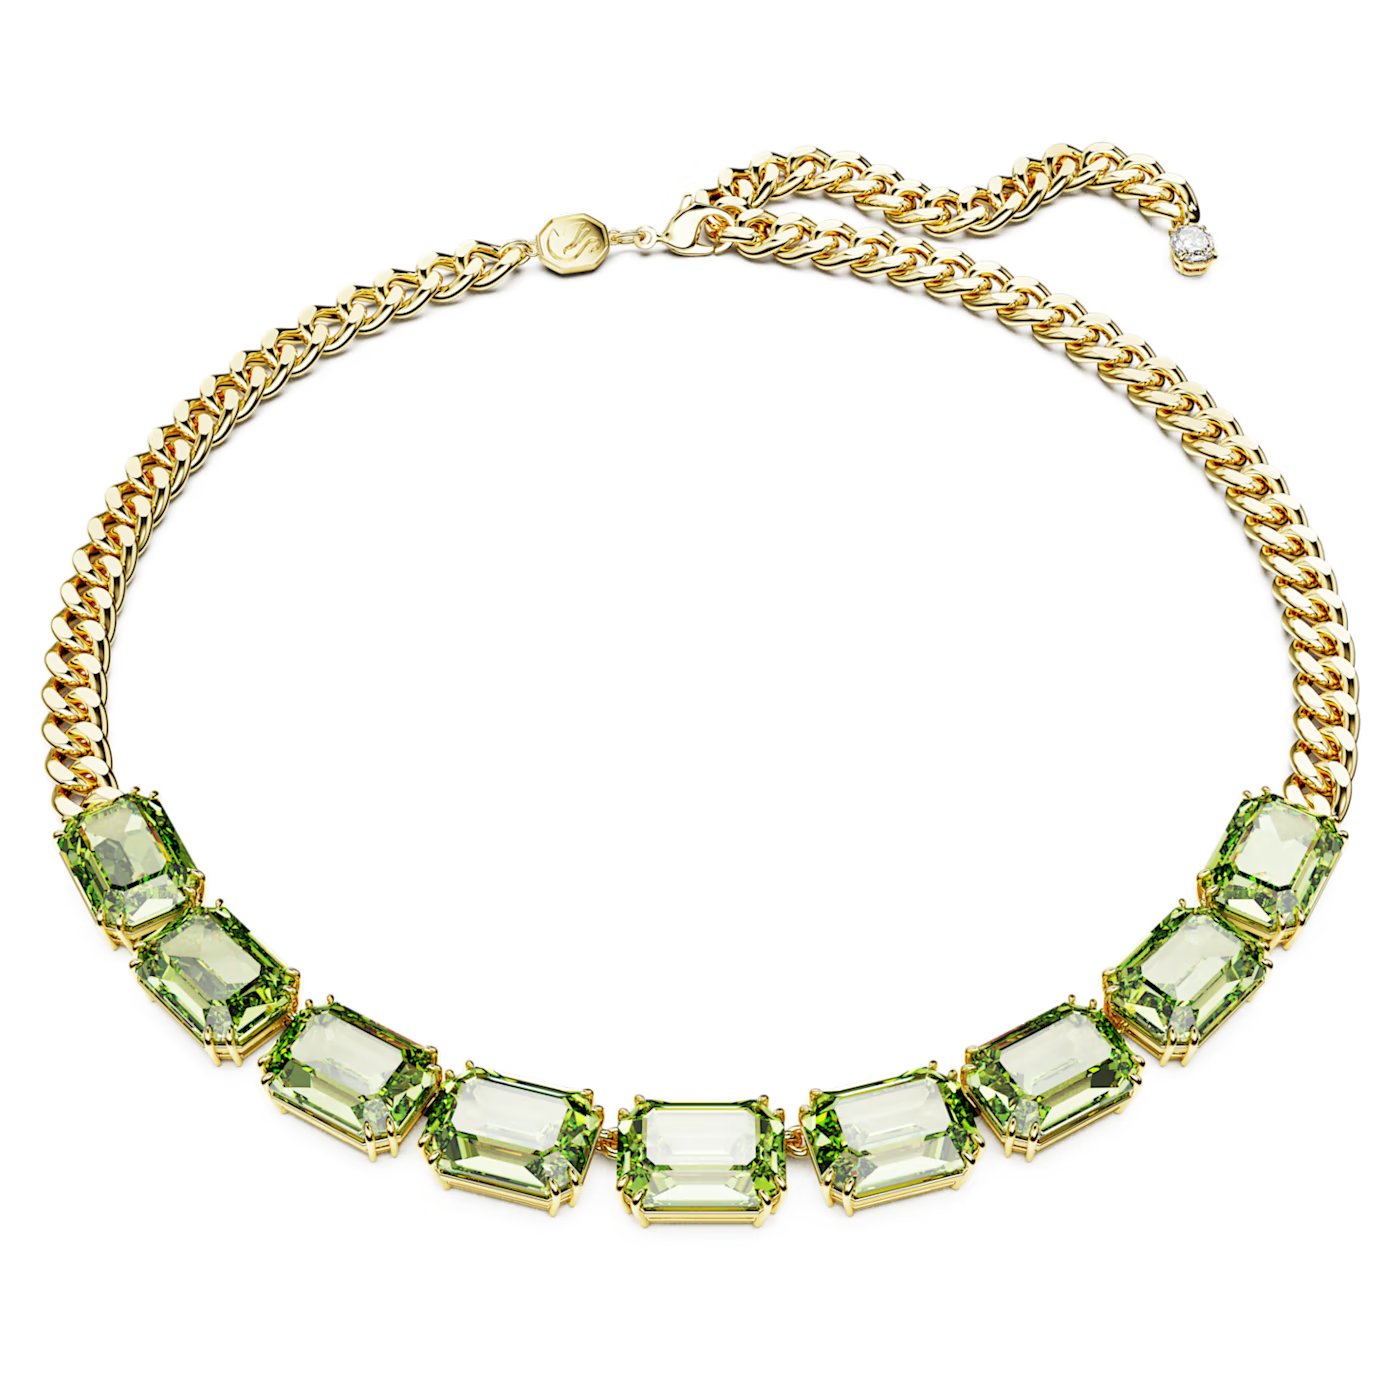 64dcb8a19a6a7_millenia-necklace--octagon-cut--green--gold-tone-plated-swarovski-5671255.jpg